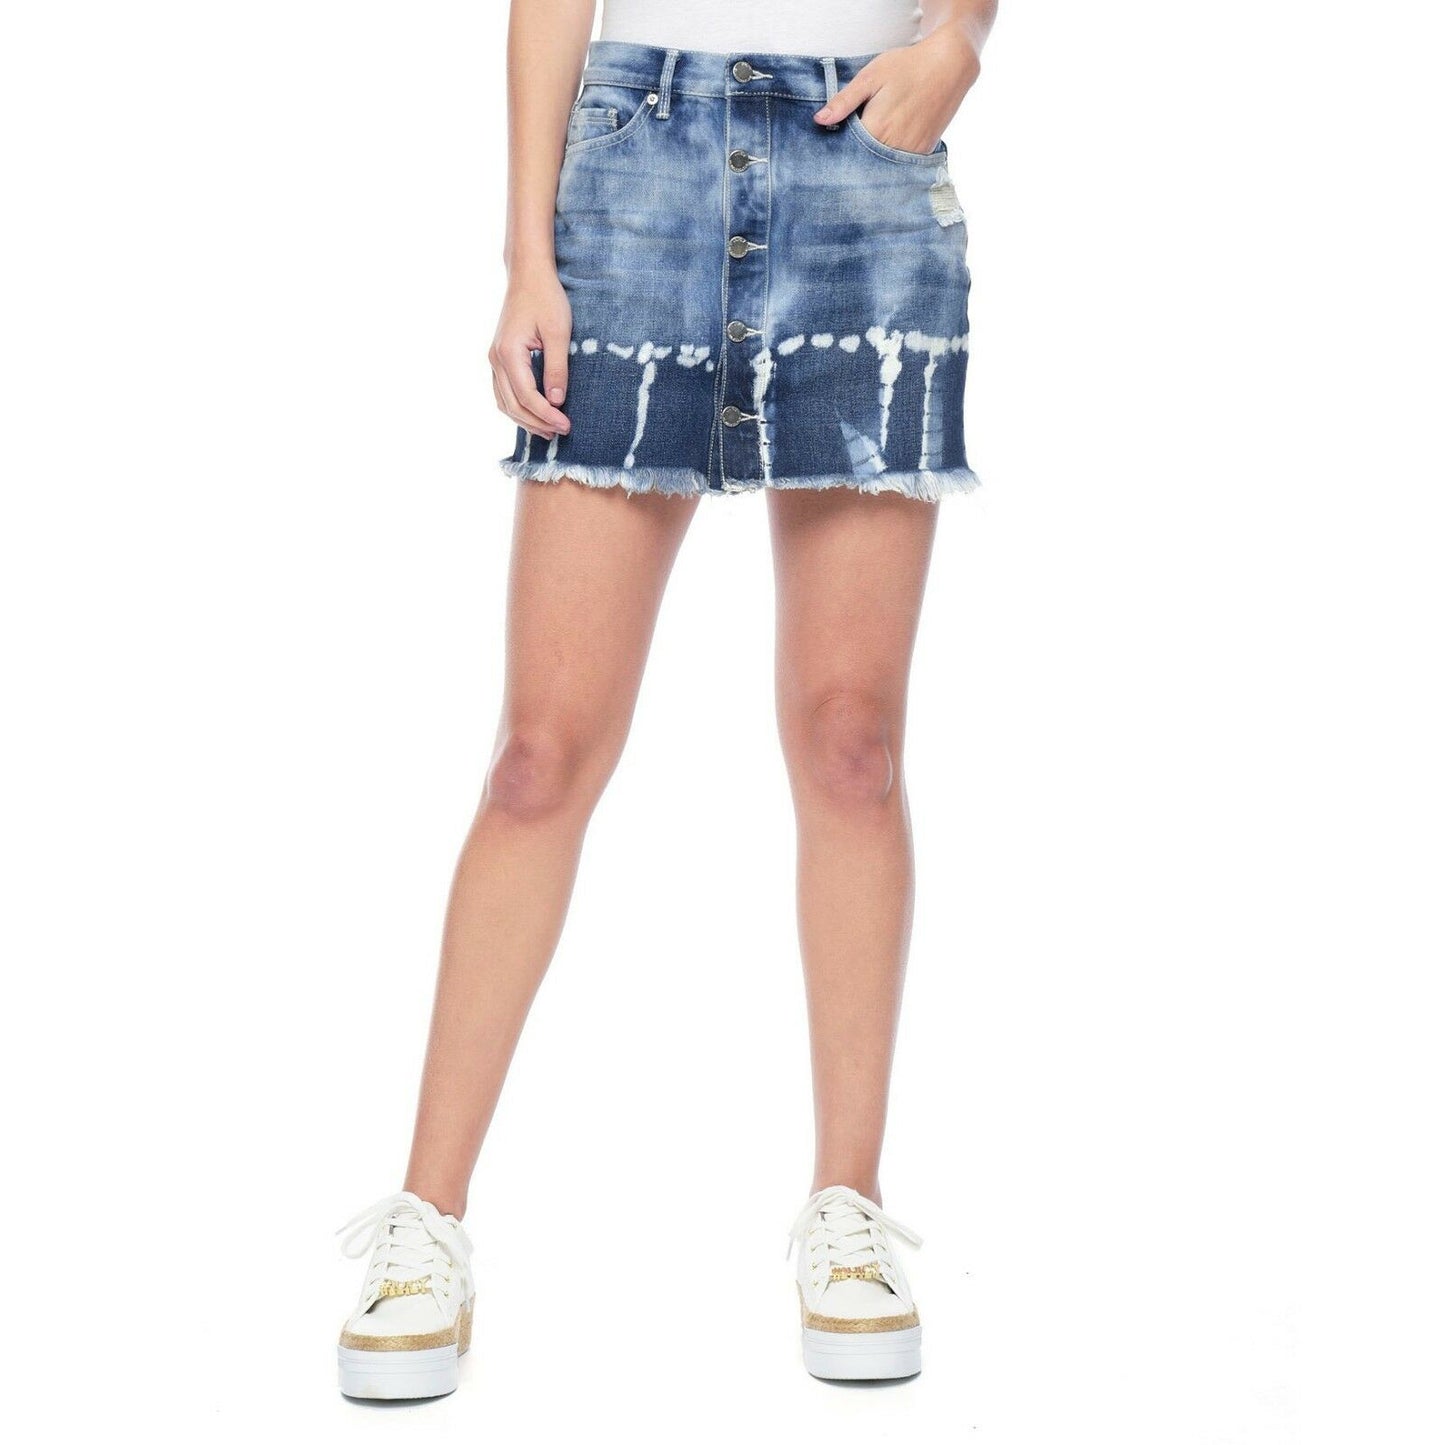 Juicy Couture Black Label Bleach Blonde Tye Dye Denim Jean Mini Skirt 28 NWT